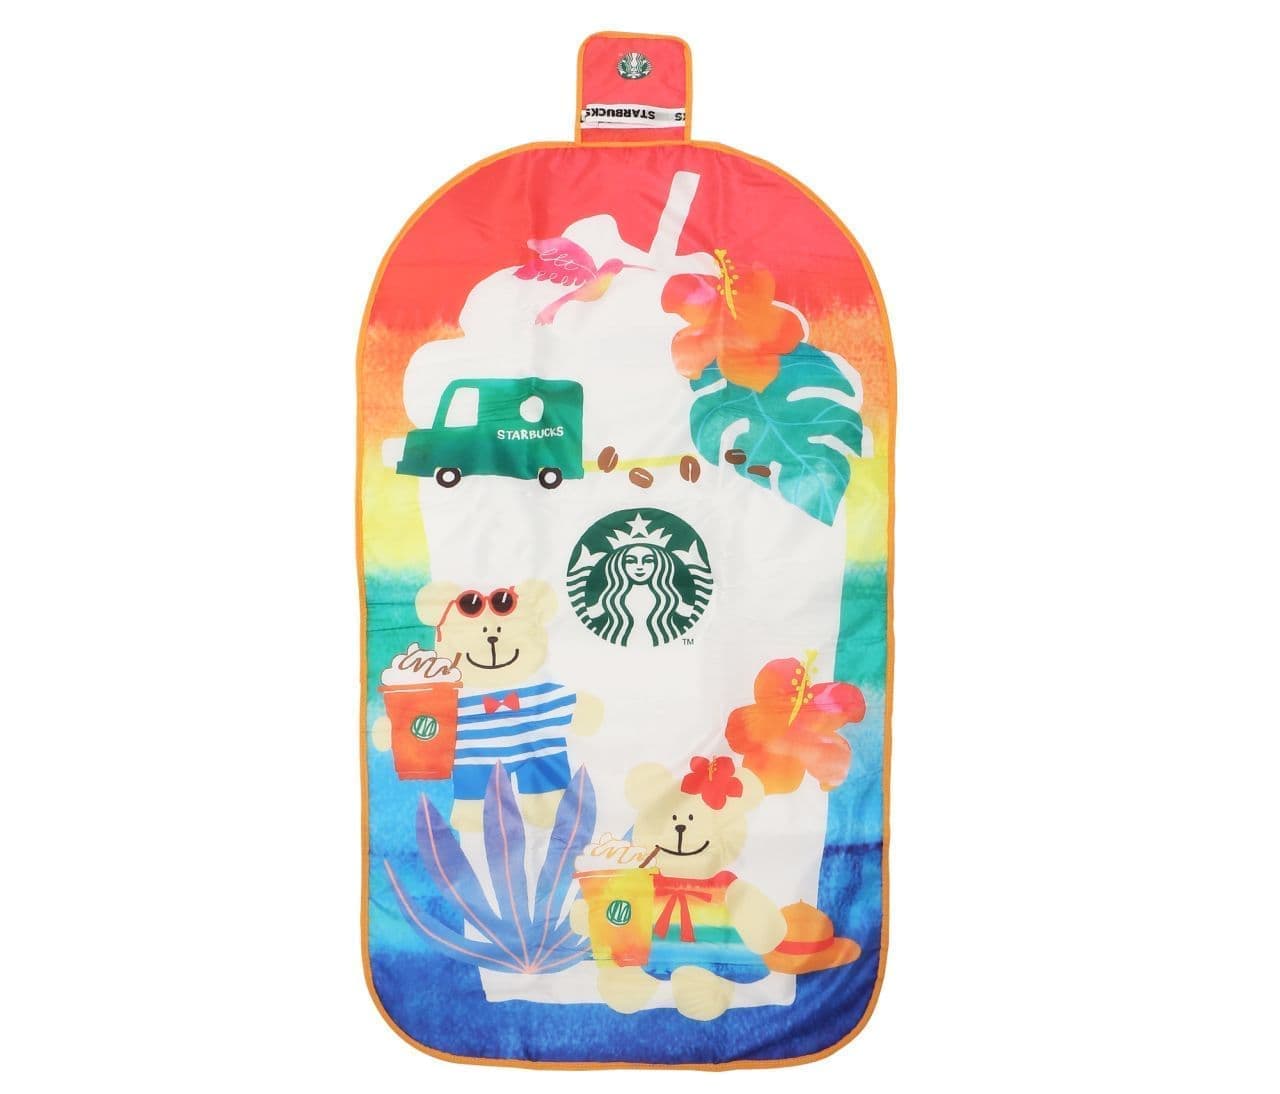 Starbucks "Portable Picnic Mat Summer Days"